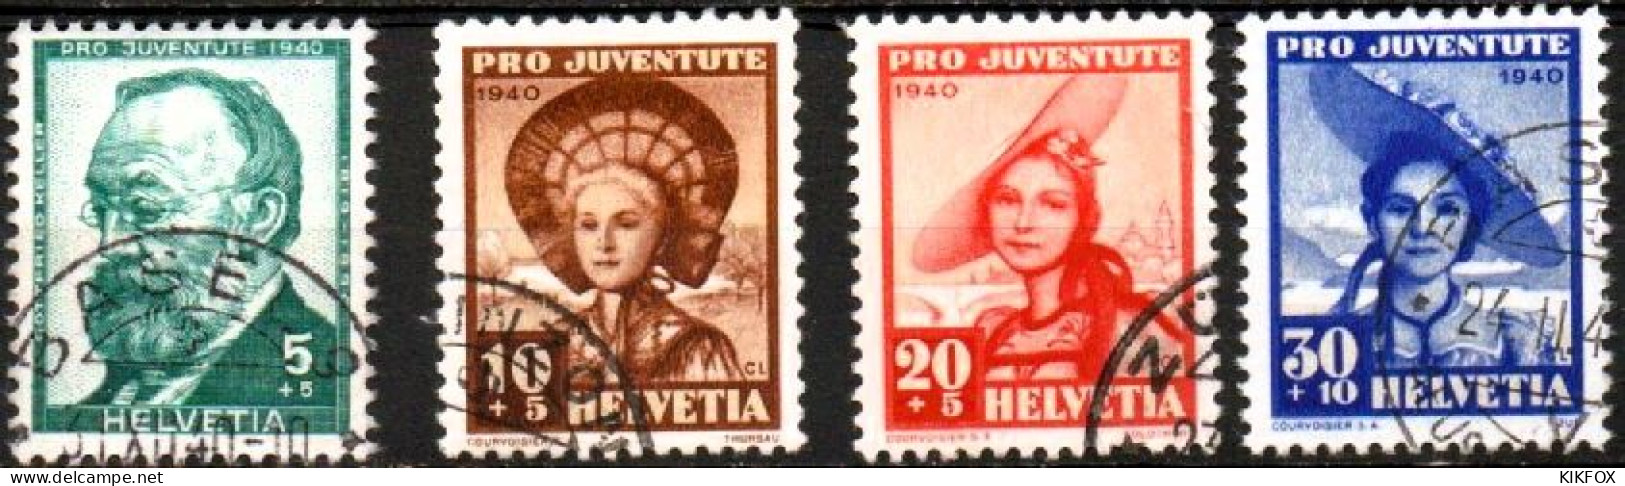 SUISSE ,SCHWEIZ,1940, MI  373 - 376,  YV  354 - 357, PRO JUVENTUTE, GESTEMPELT, OBLITERE - Used Stamps